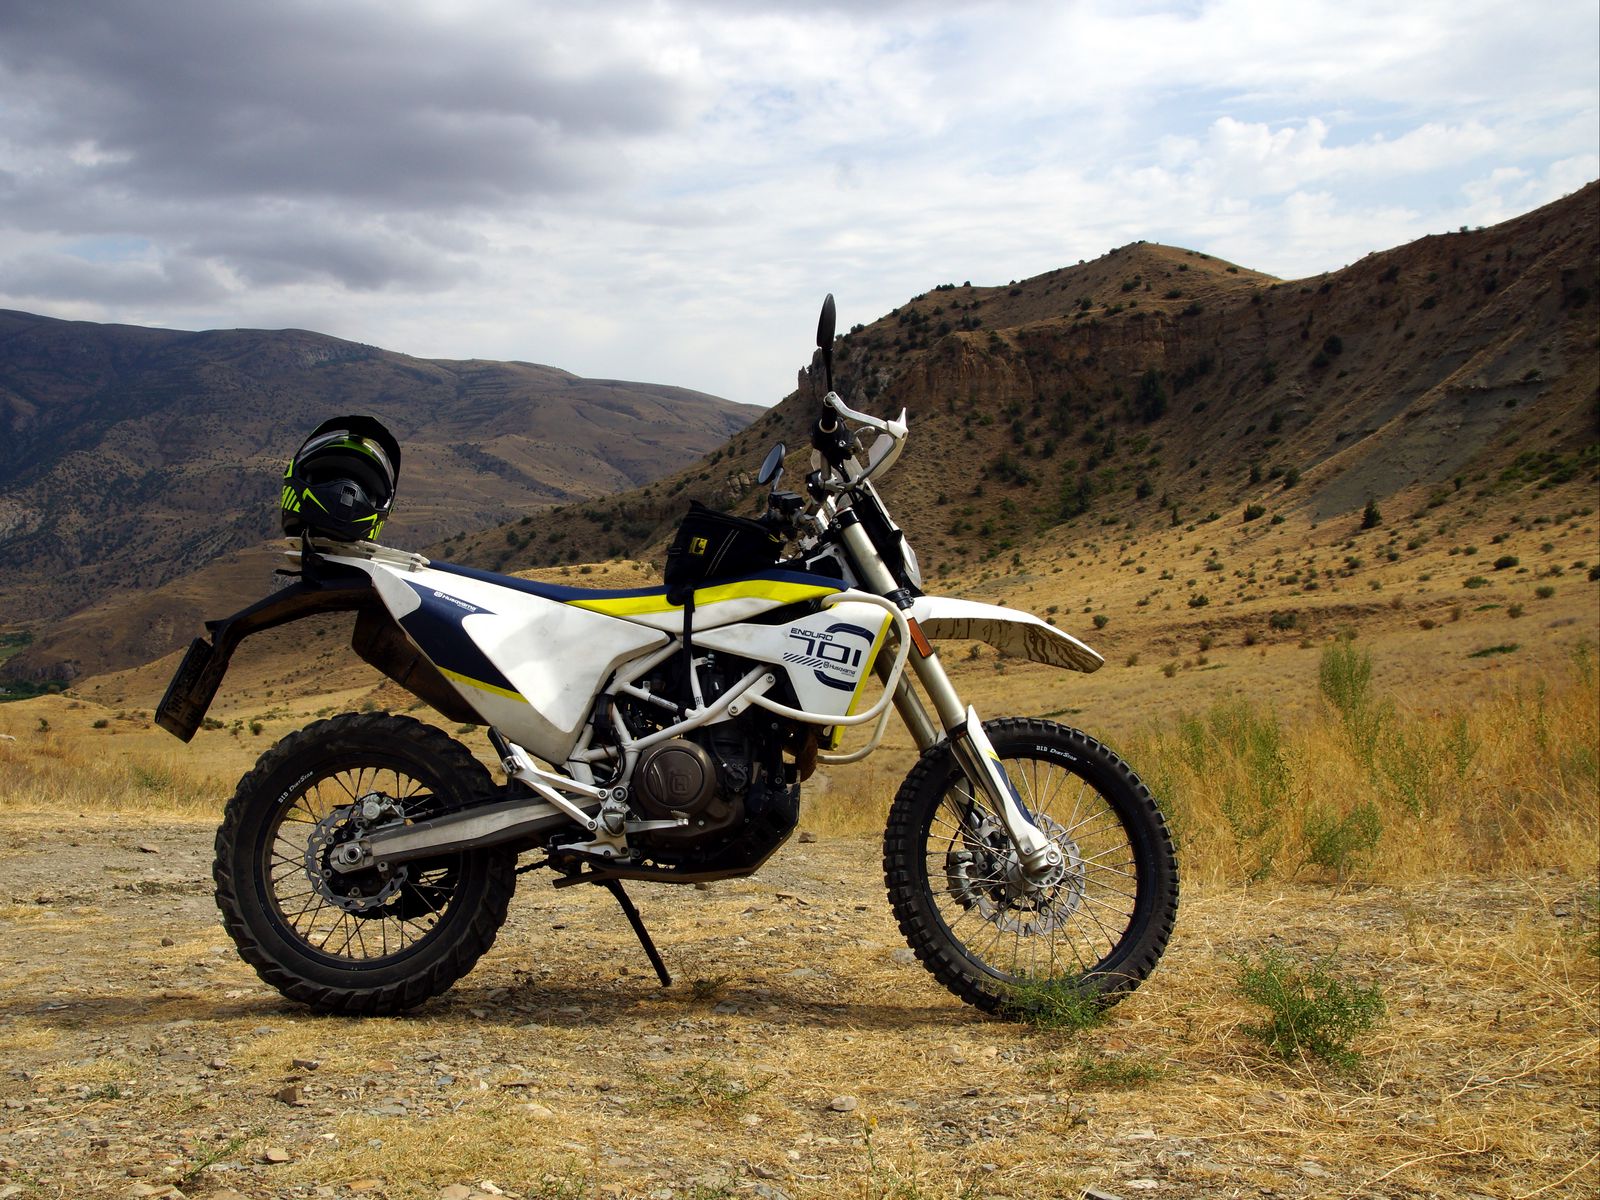 1600x1200 Wallpaper motorcycle, bike, mountains, nature